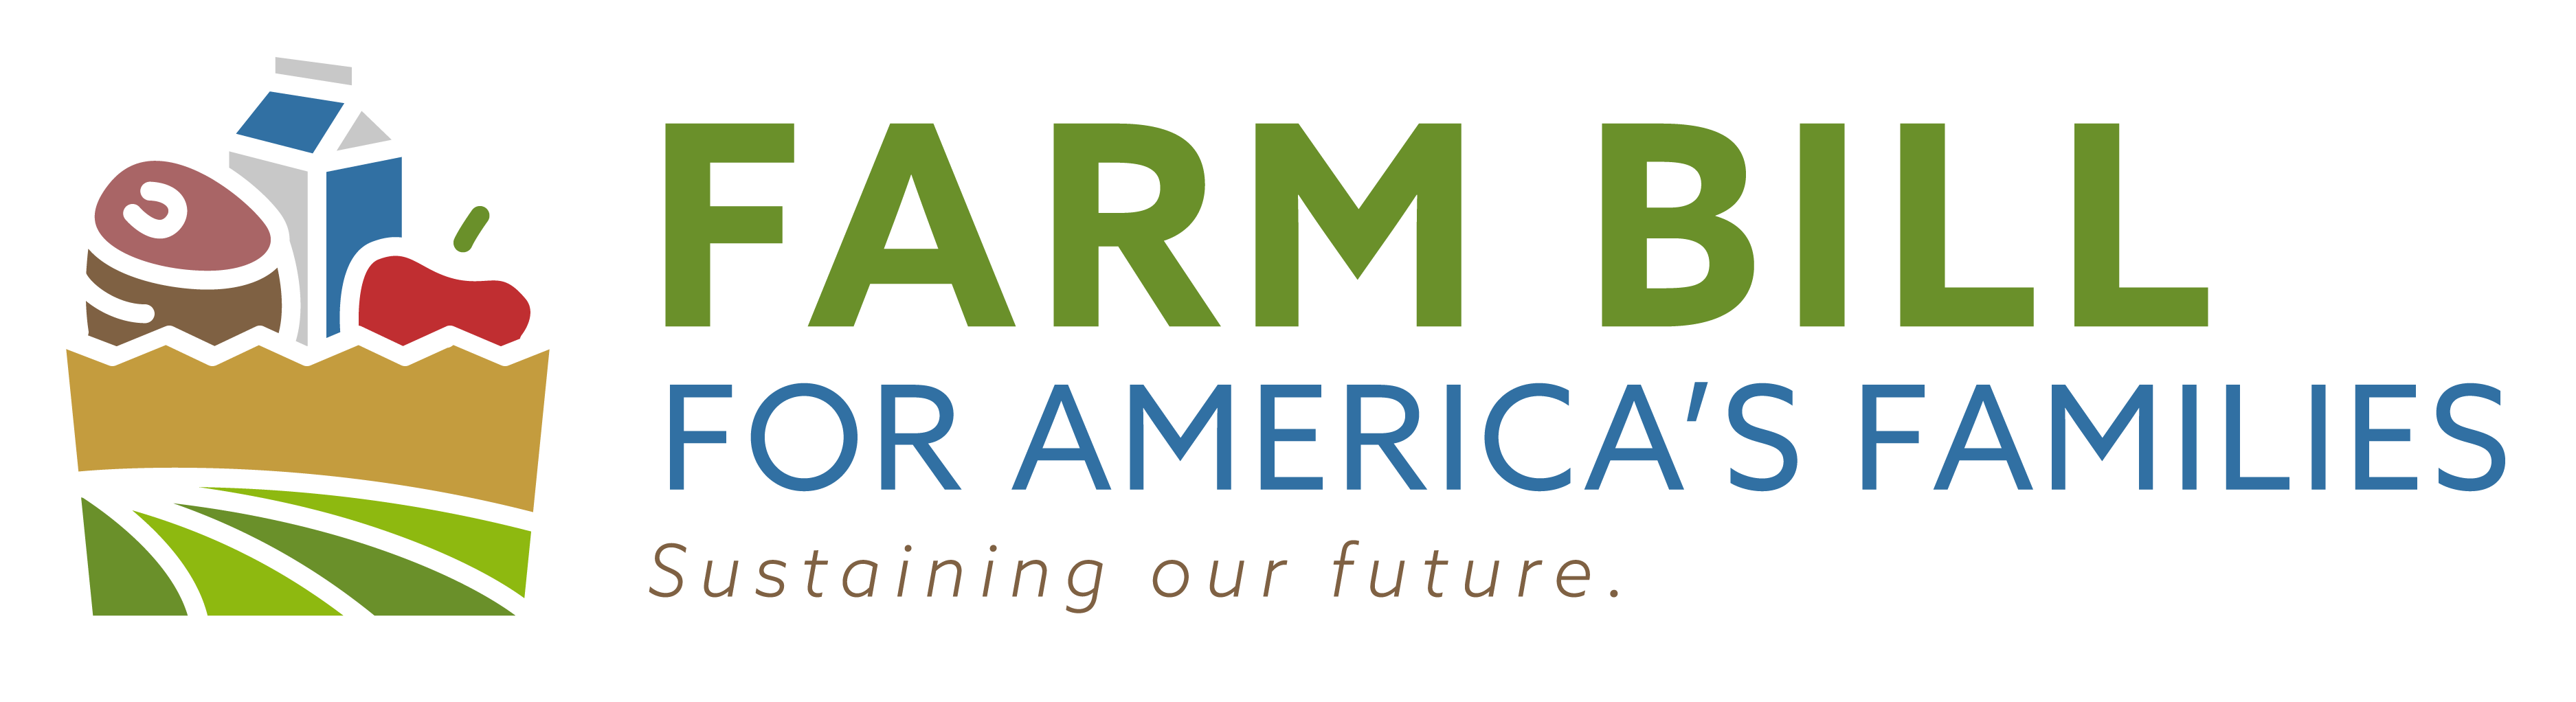 Farm Bill for America's Families